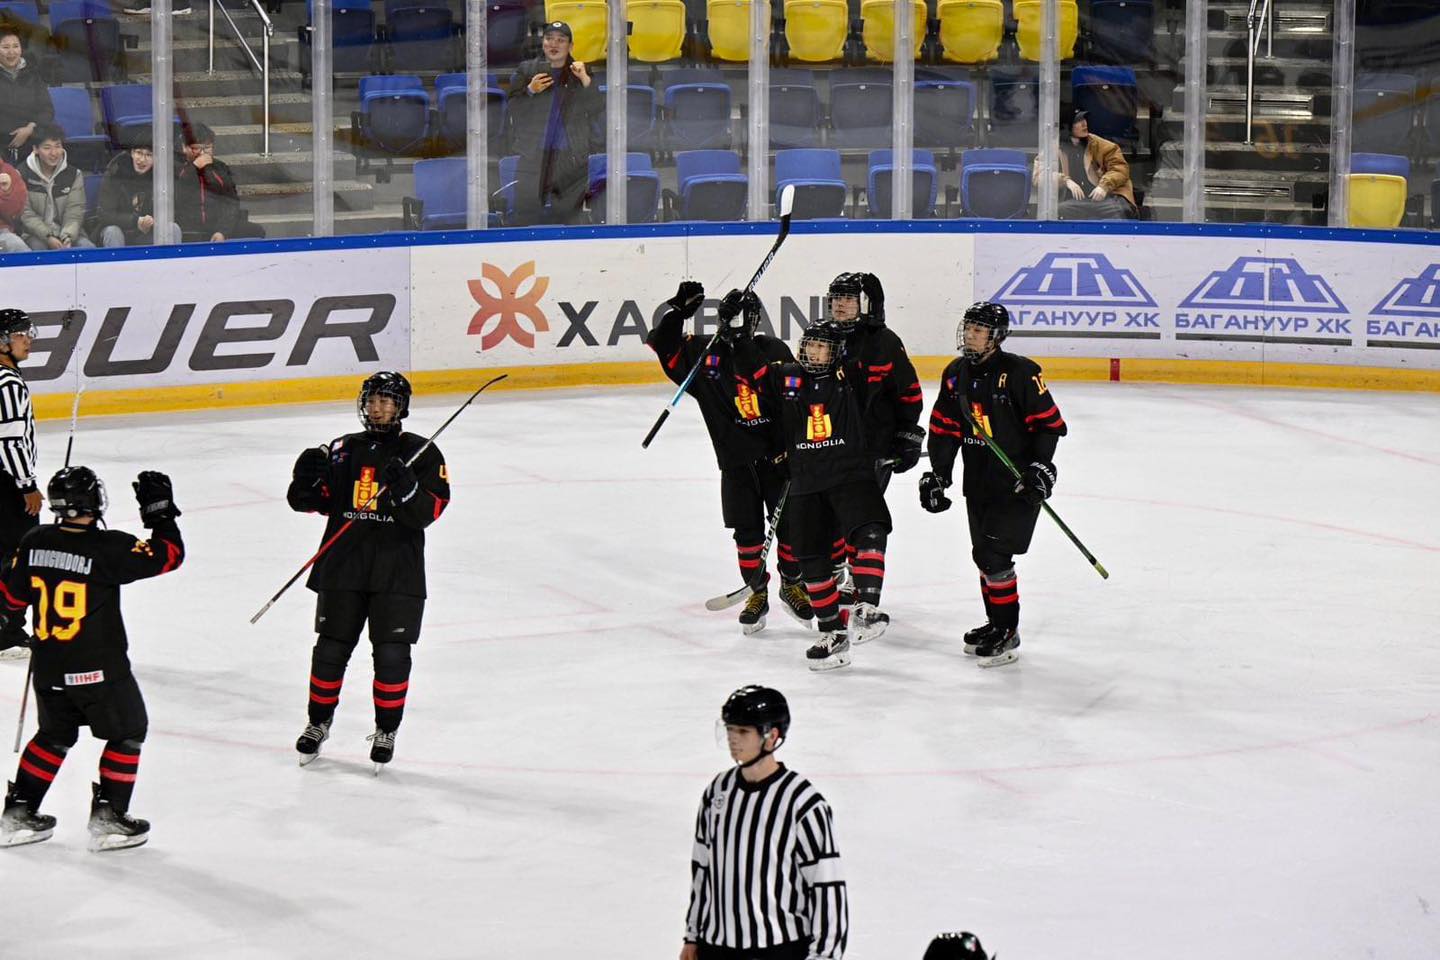 IIHF Ice Hockey U18 Asia and Oceania Championship underway